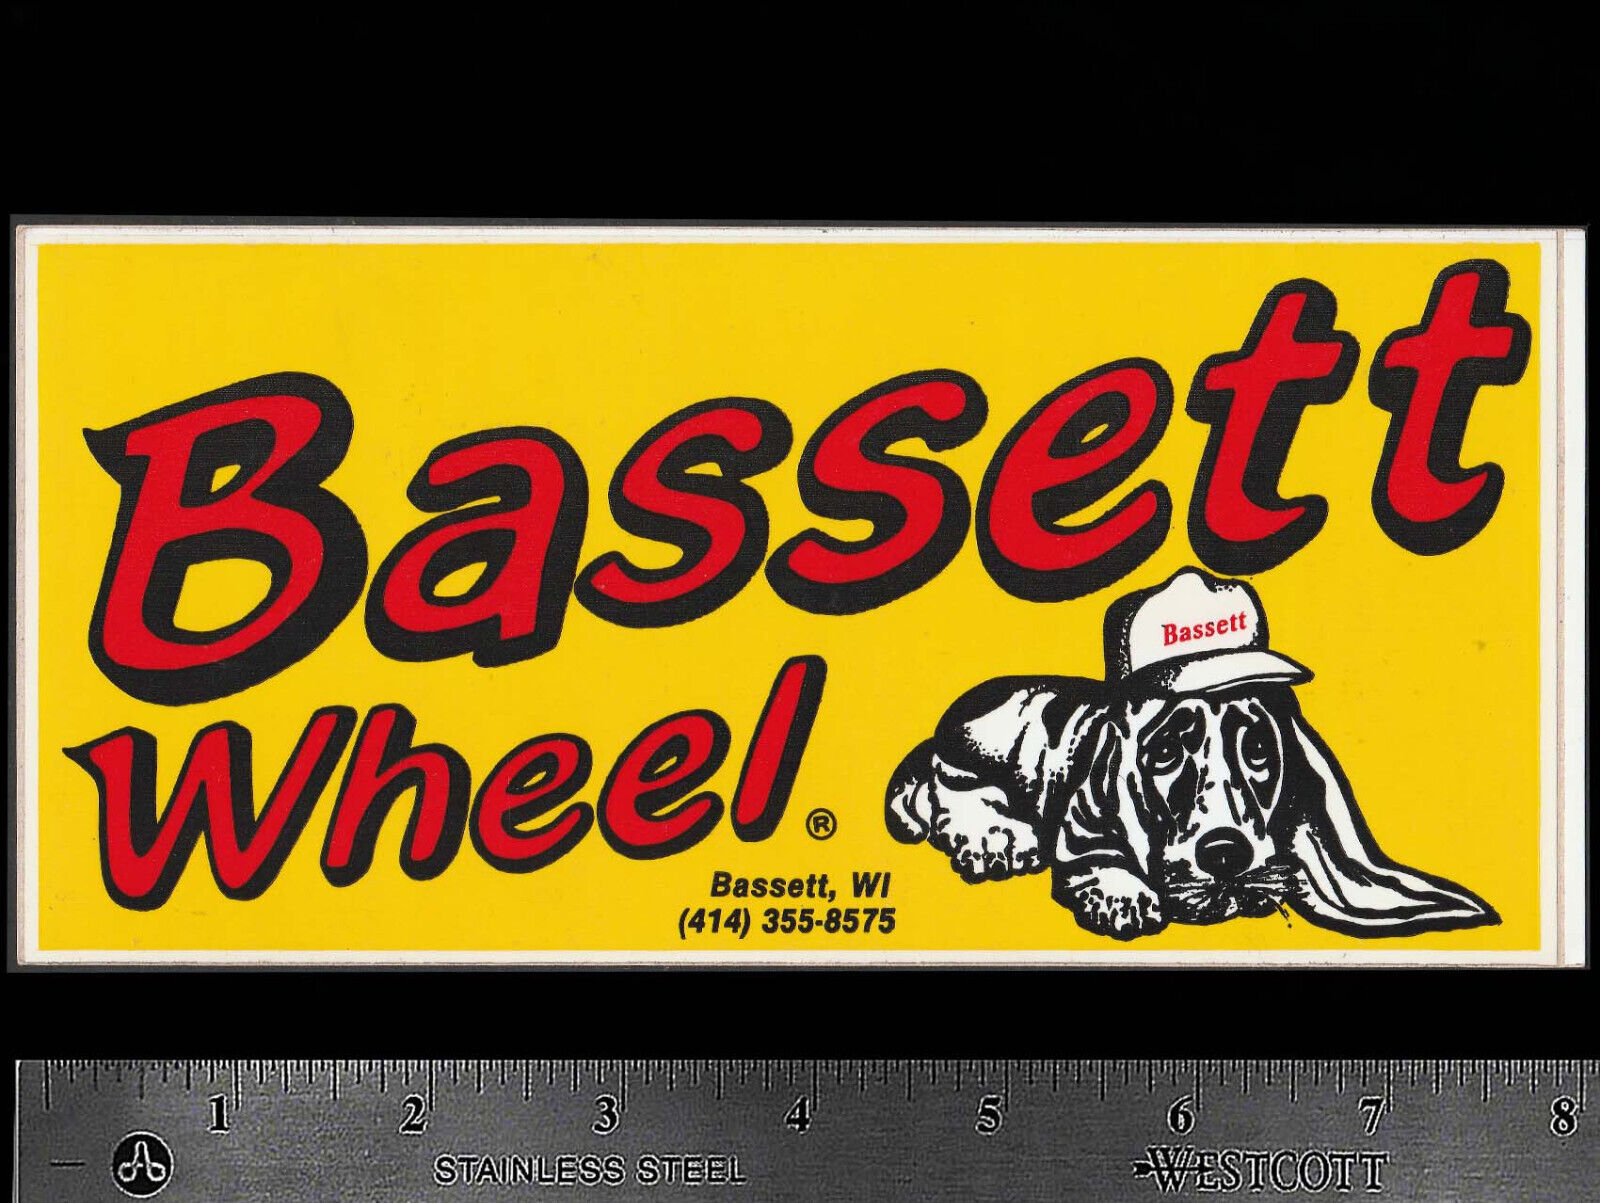 BASSETT Wheel - Bassett, WI - Original Vintage 1980’s Racing Decal/Sticker